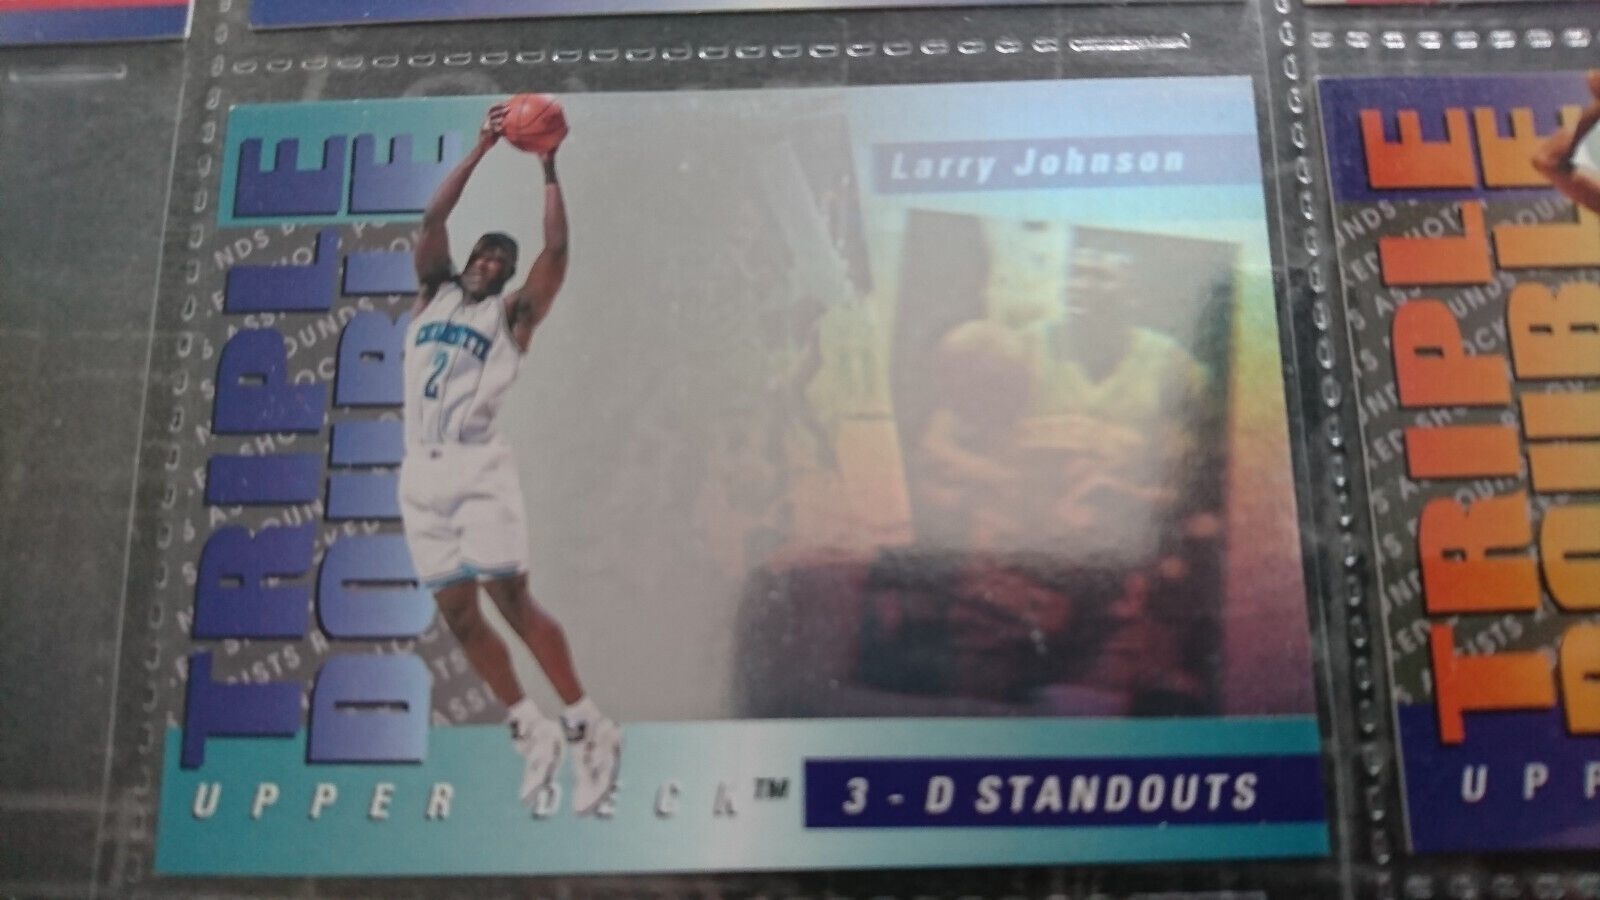 1993/94 NBA Triple Double Larry Johnson TD7 French Upper Deck Card